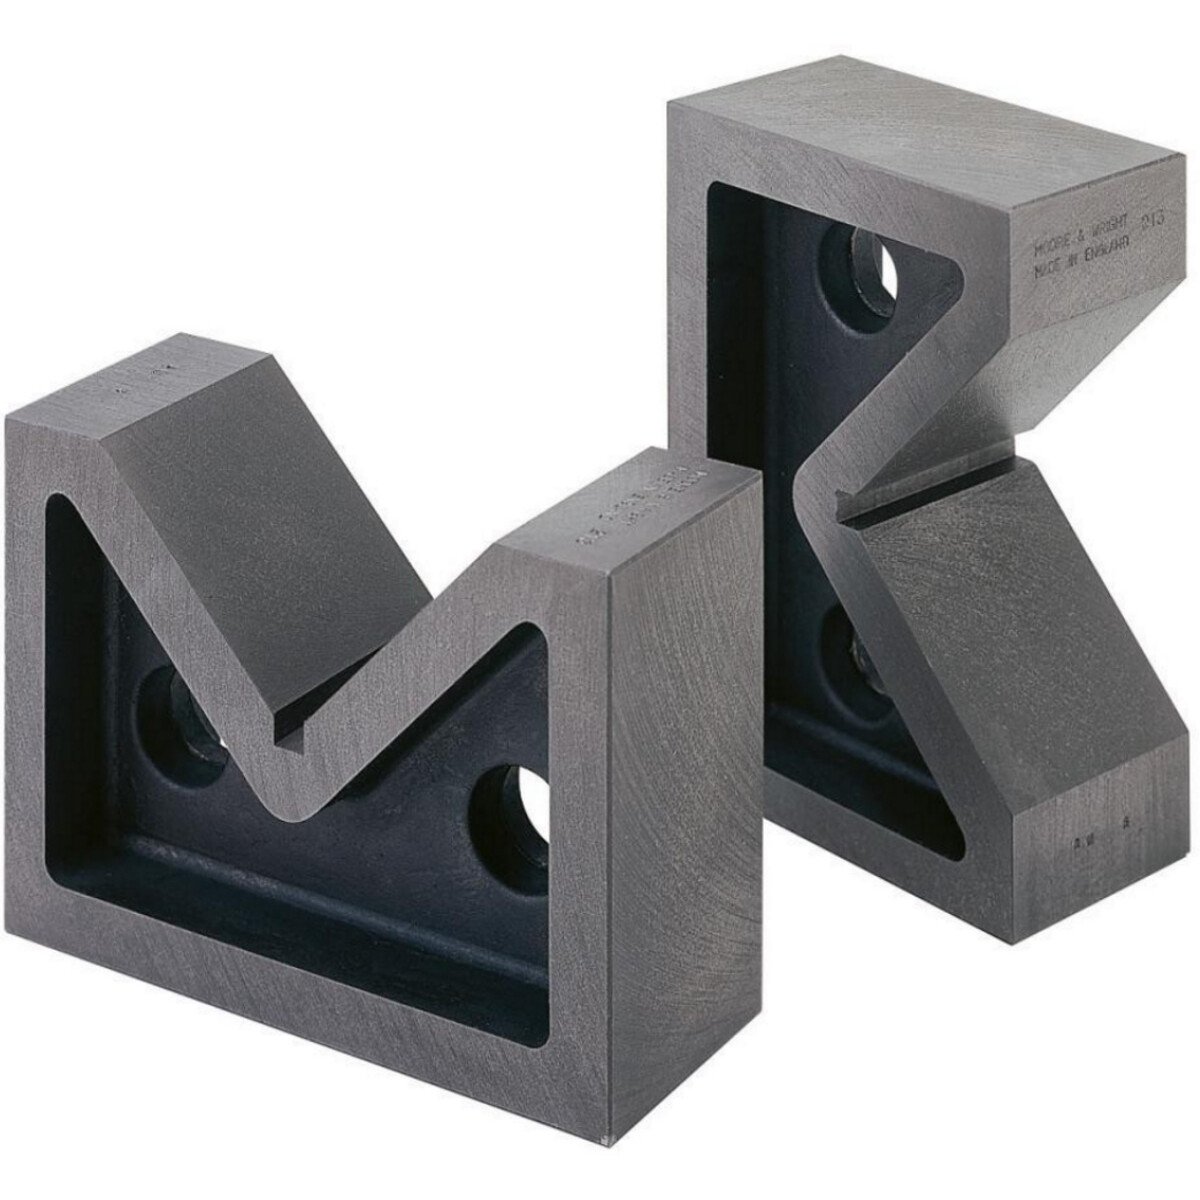 Moore & Wright 211 Traditional Vee Blocks Standard Pairs 63mm (2.48in) Capacity